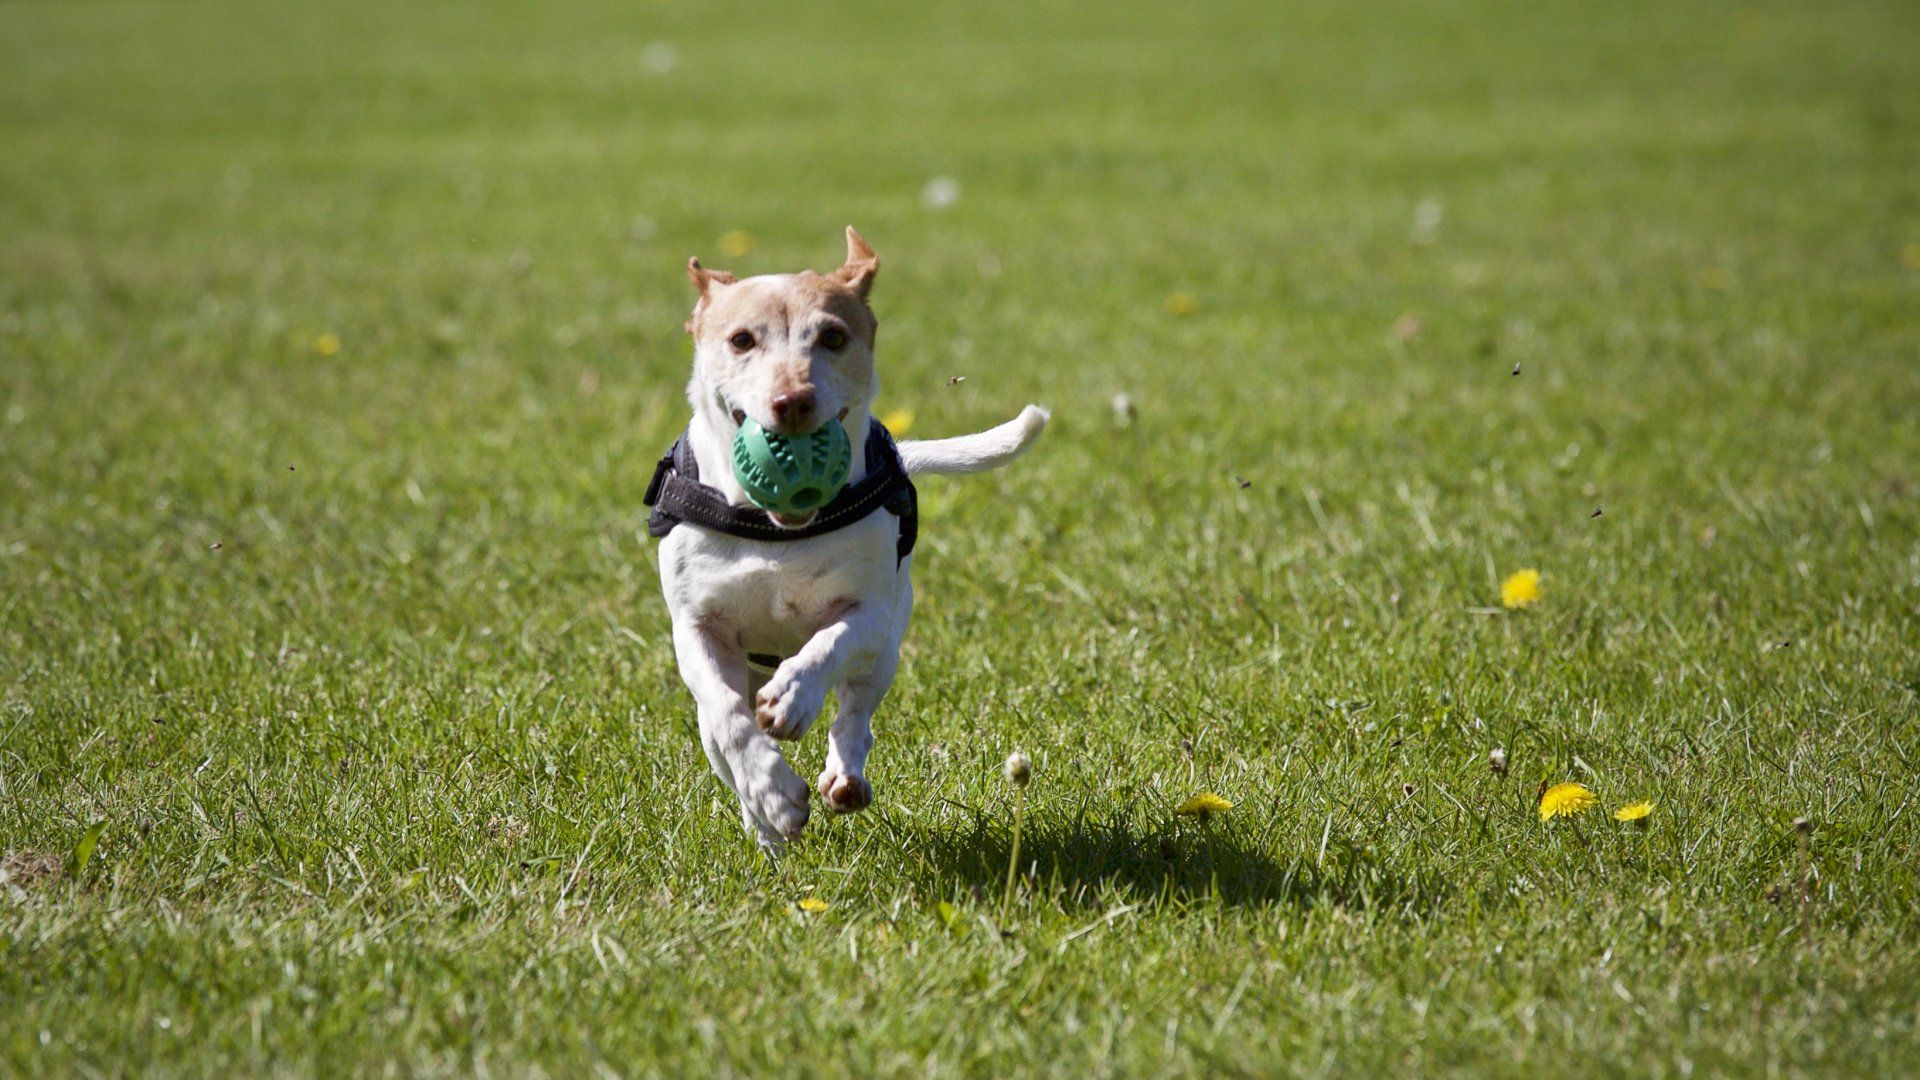 Dog running in a grassy land